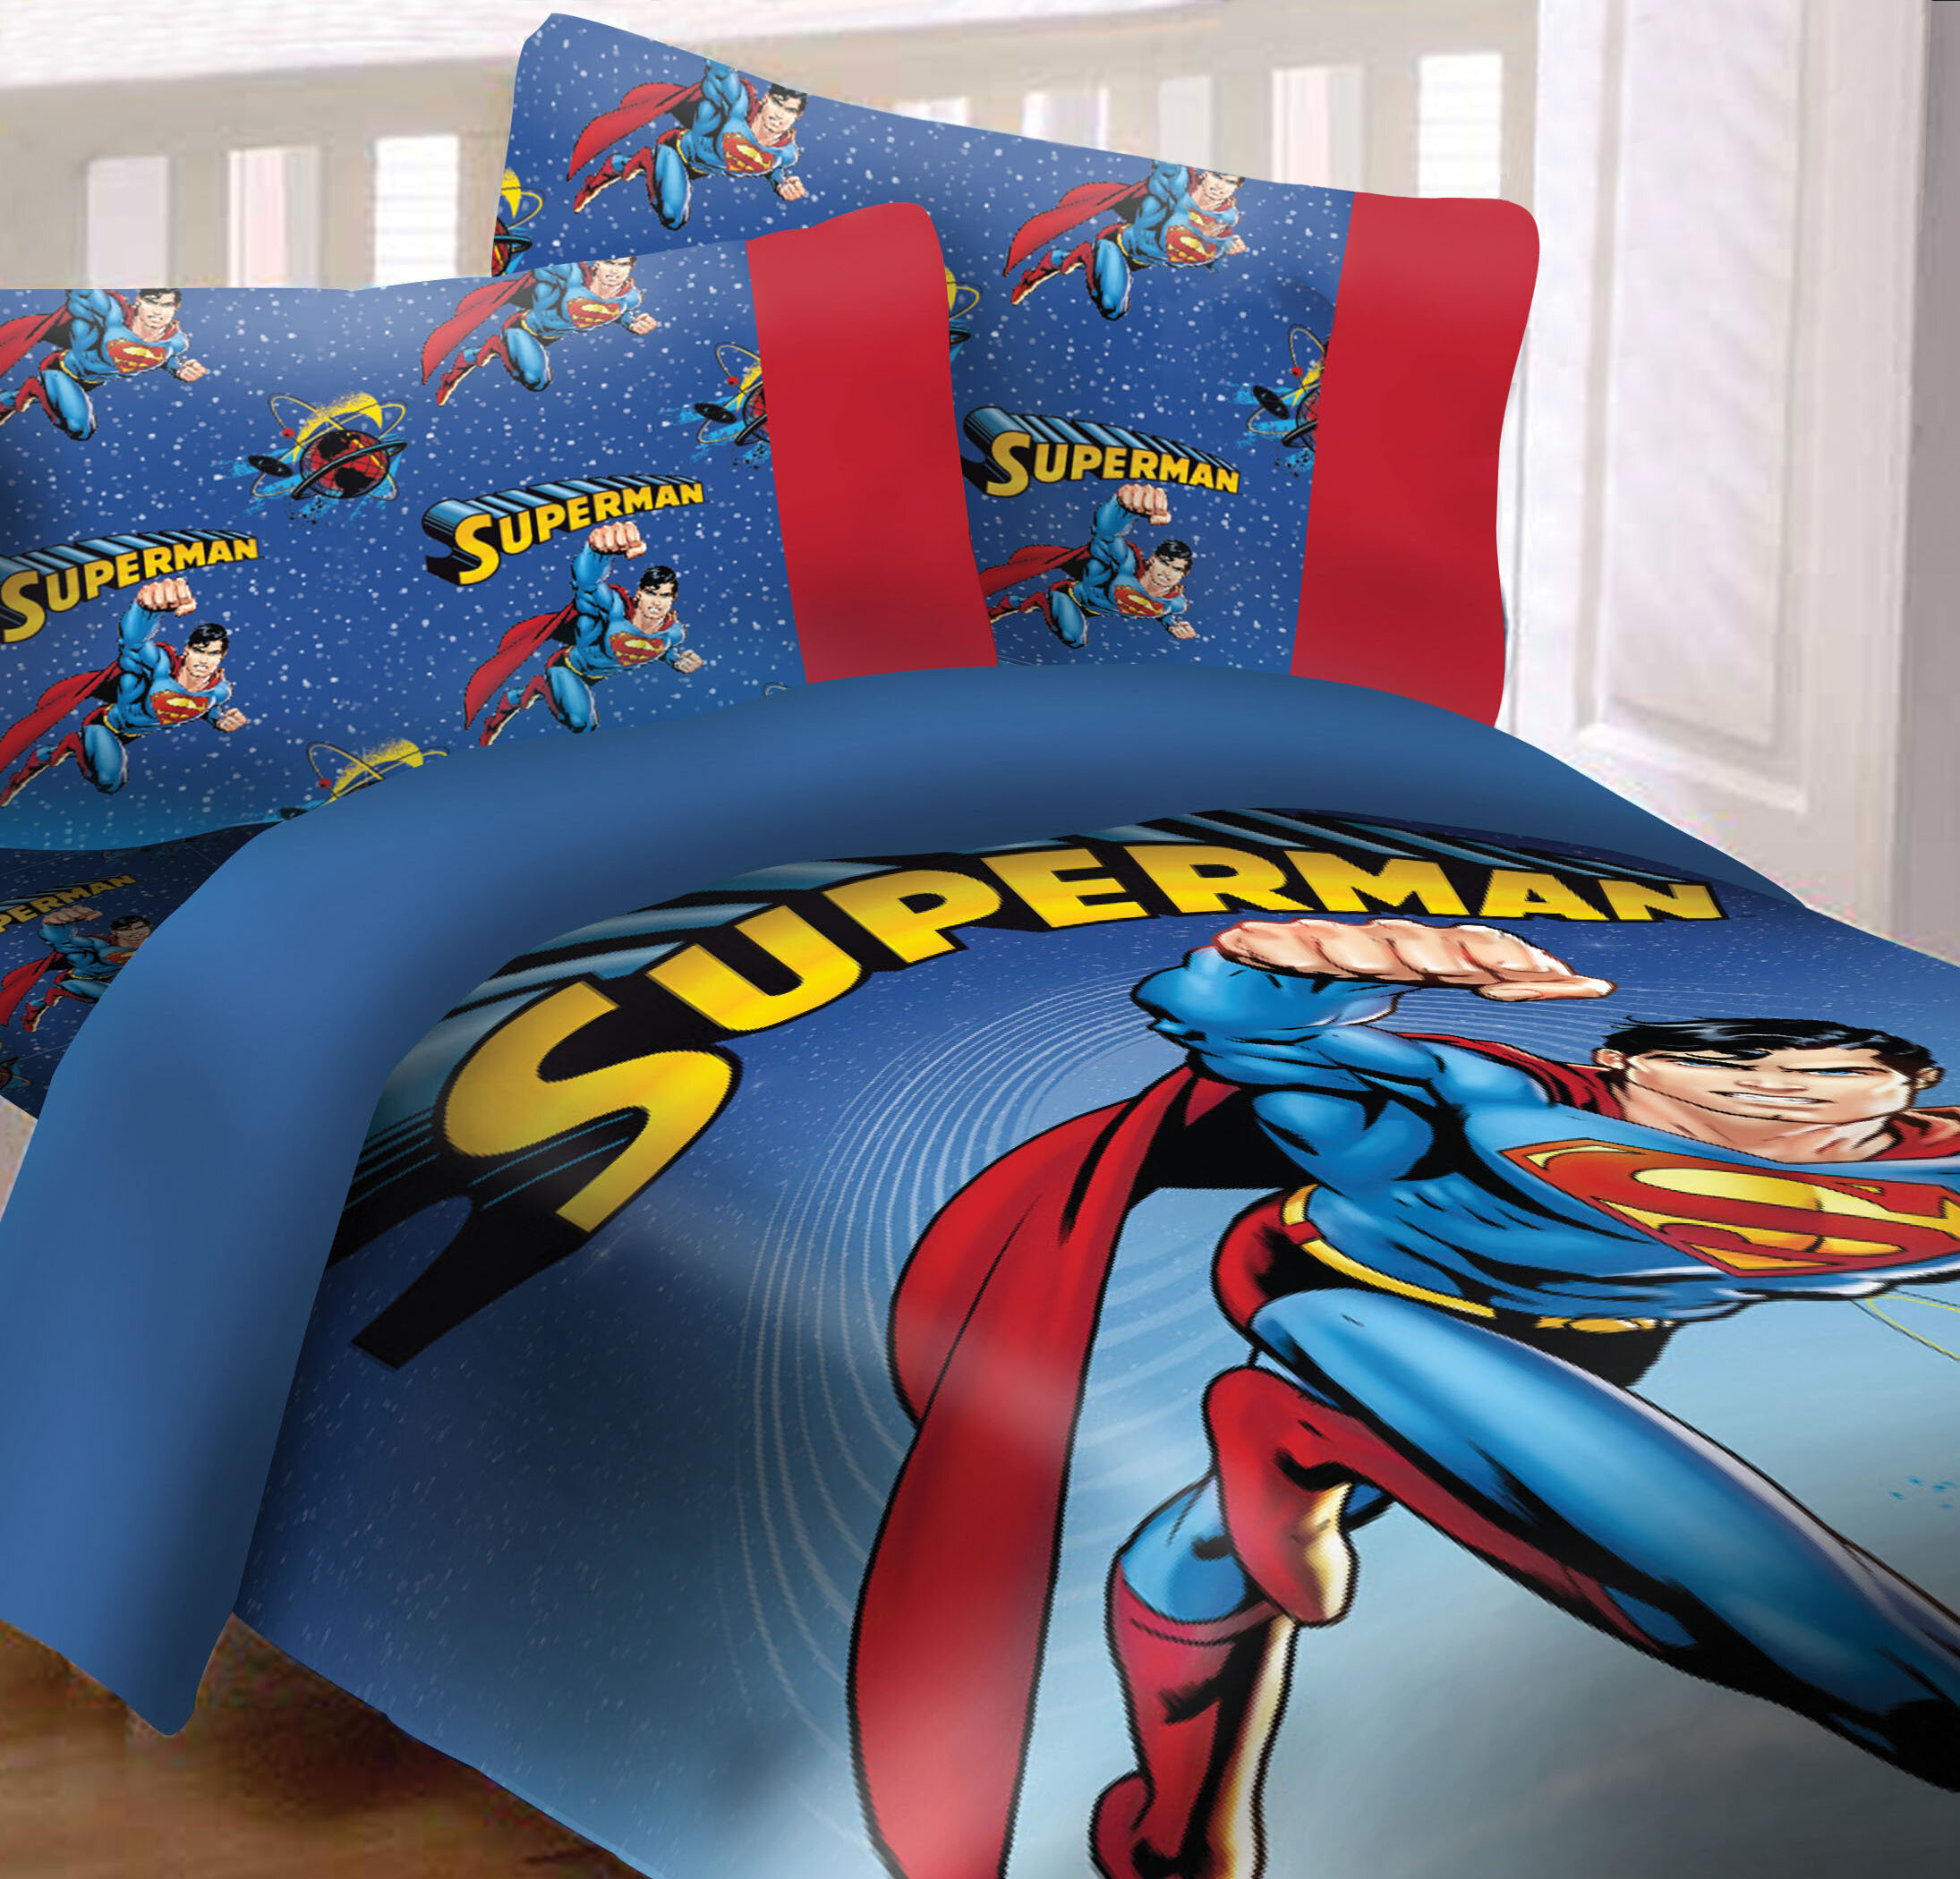 Crover Superman Universe Comforter Set Reviews Wayfair